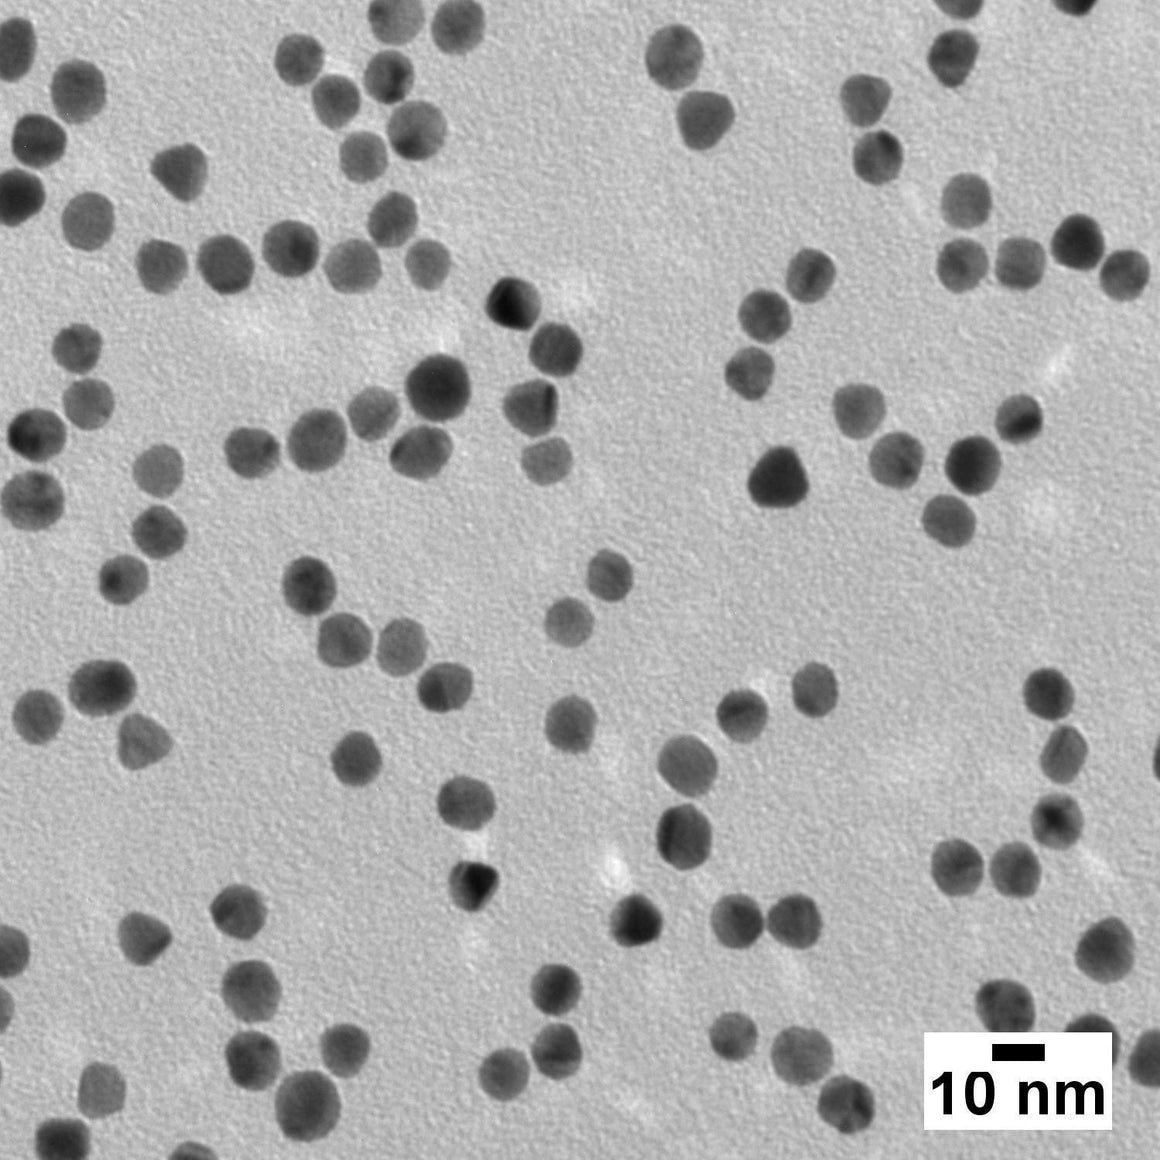 NanoXact Gold Nanospheres – PVP (Dried)